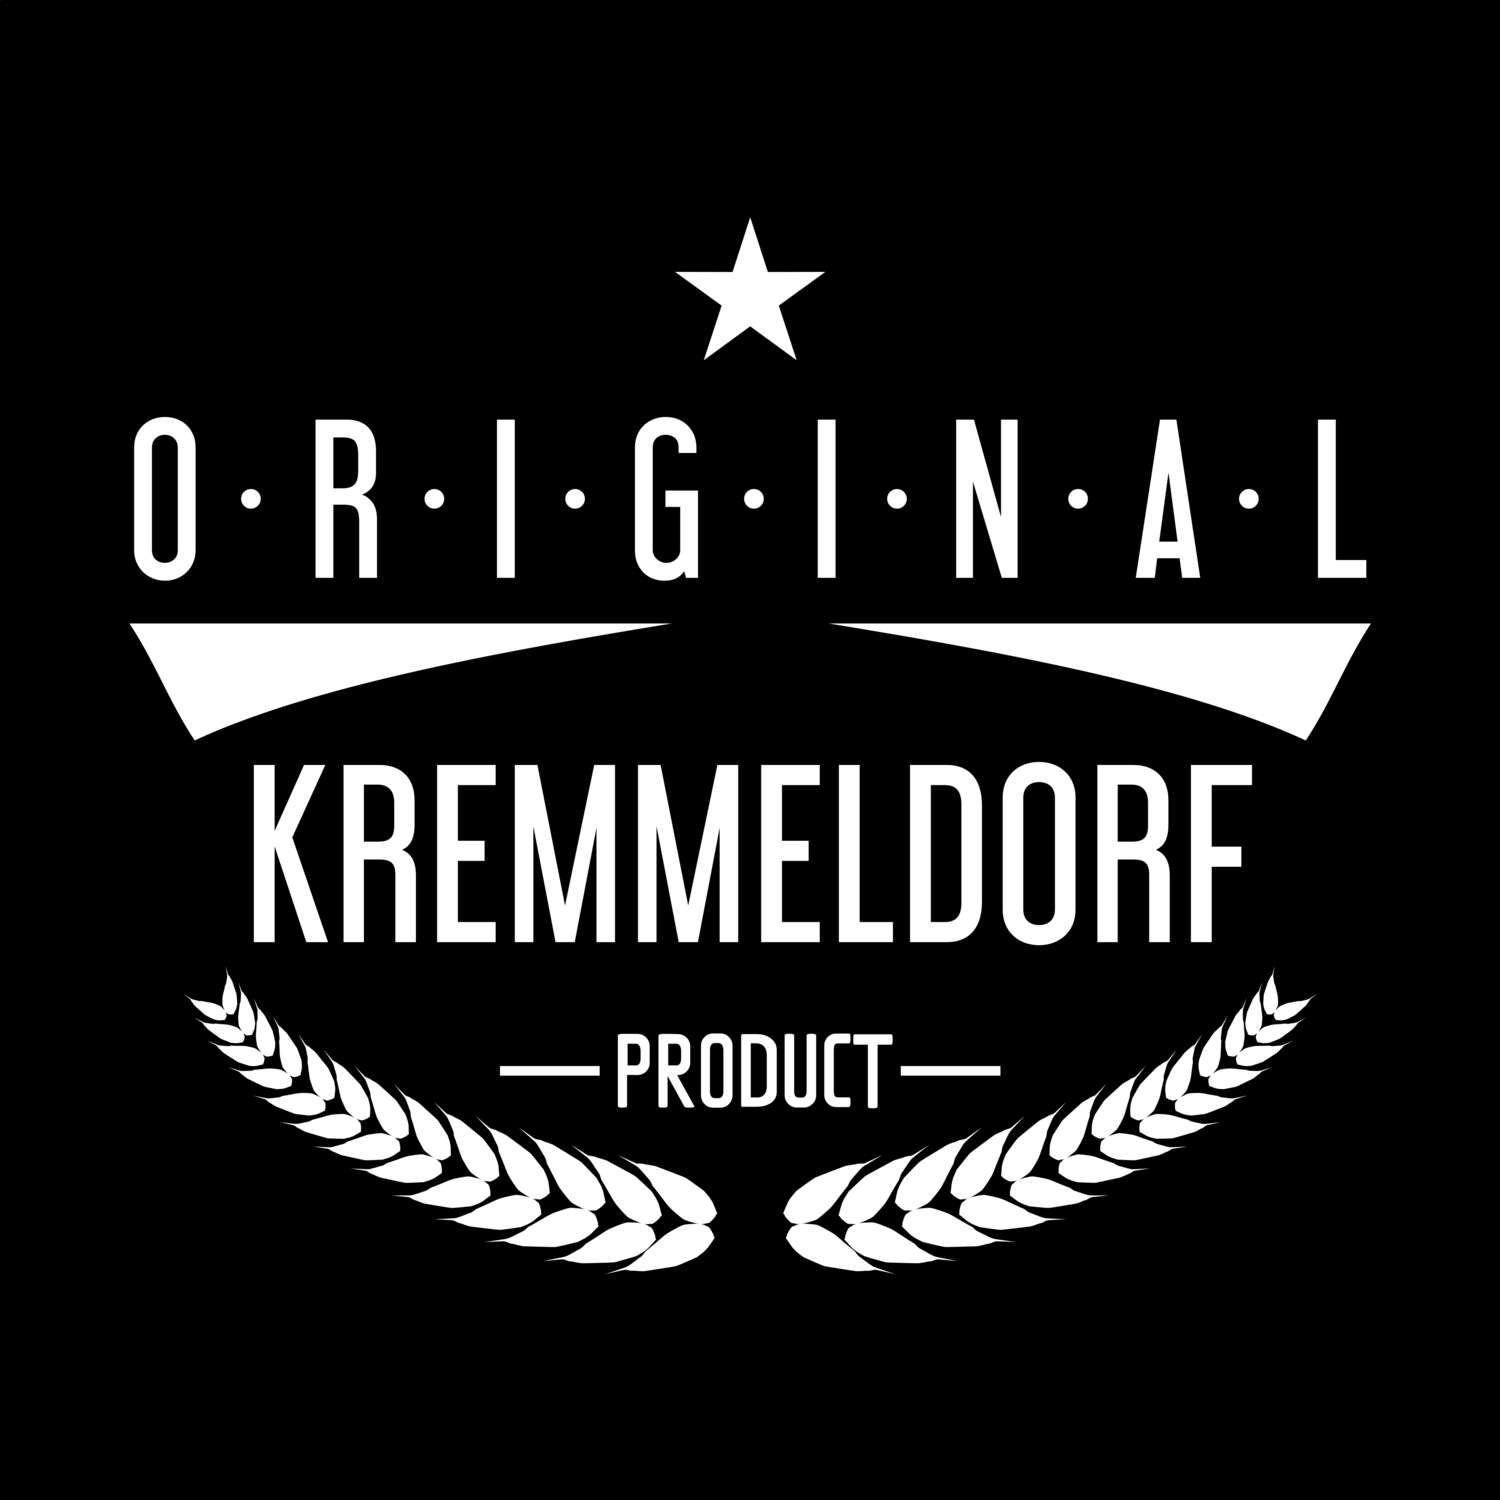 Kremmeldorf T-Shirt »Original Product«